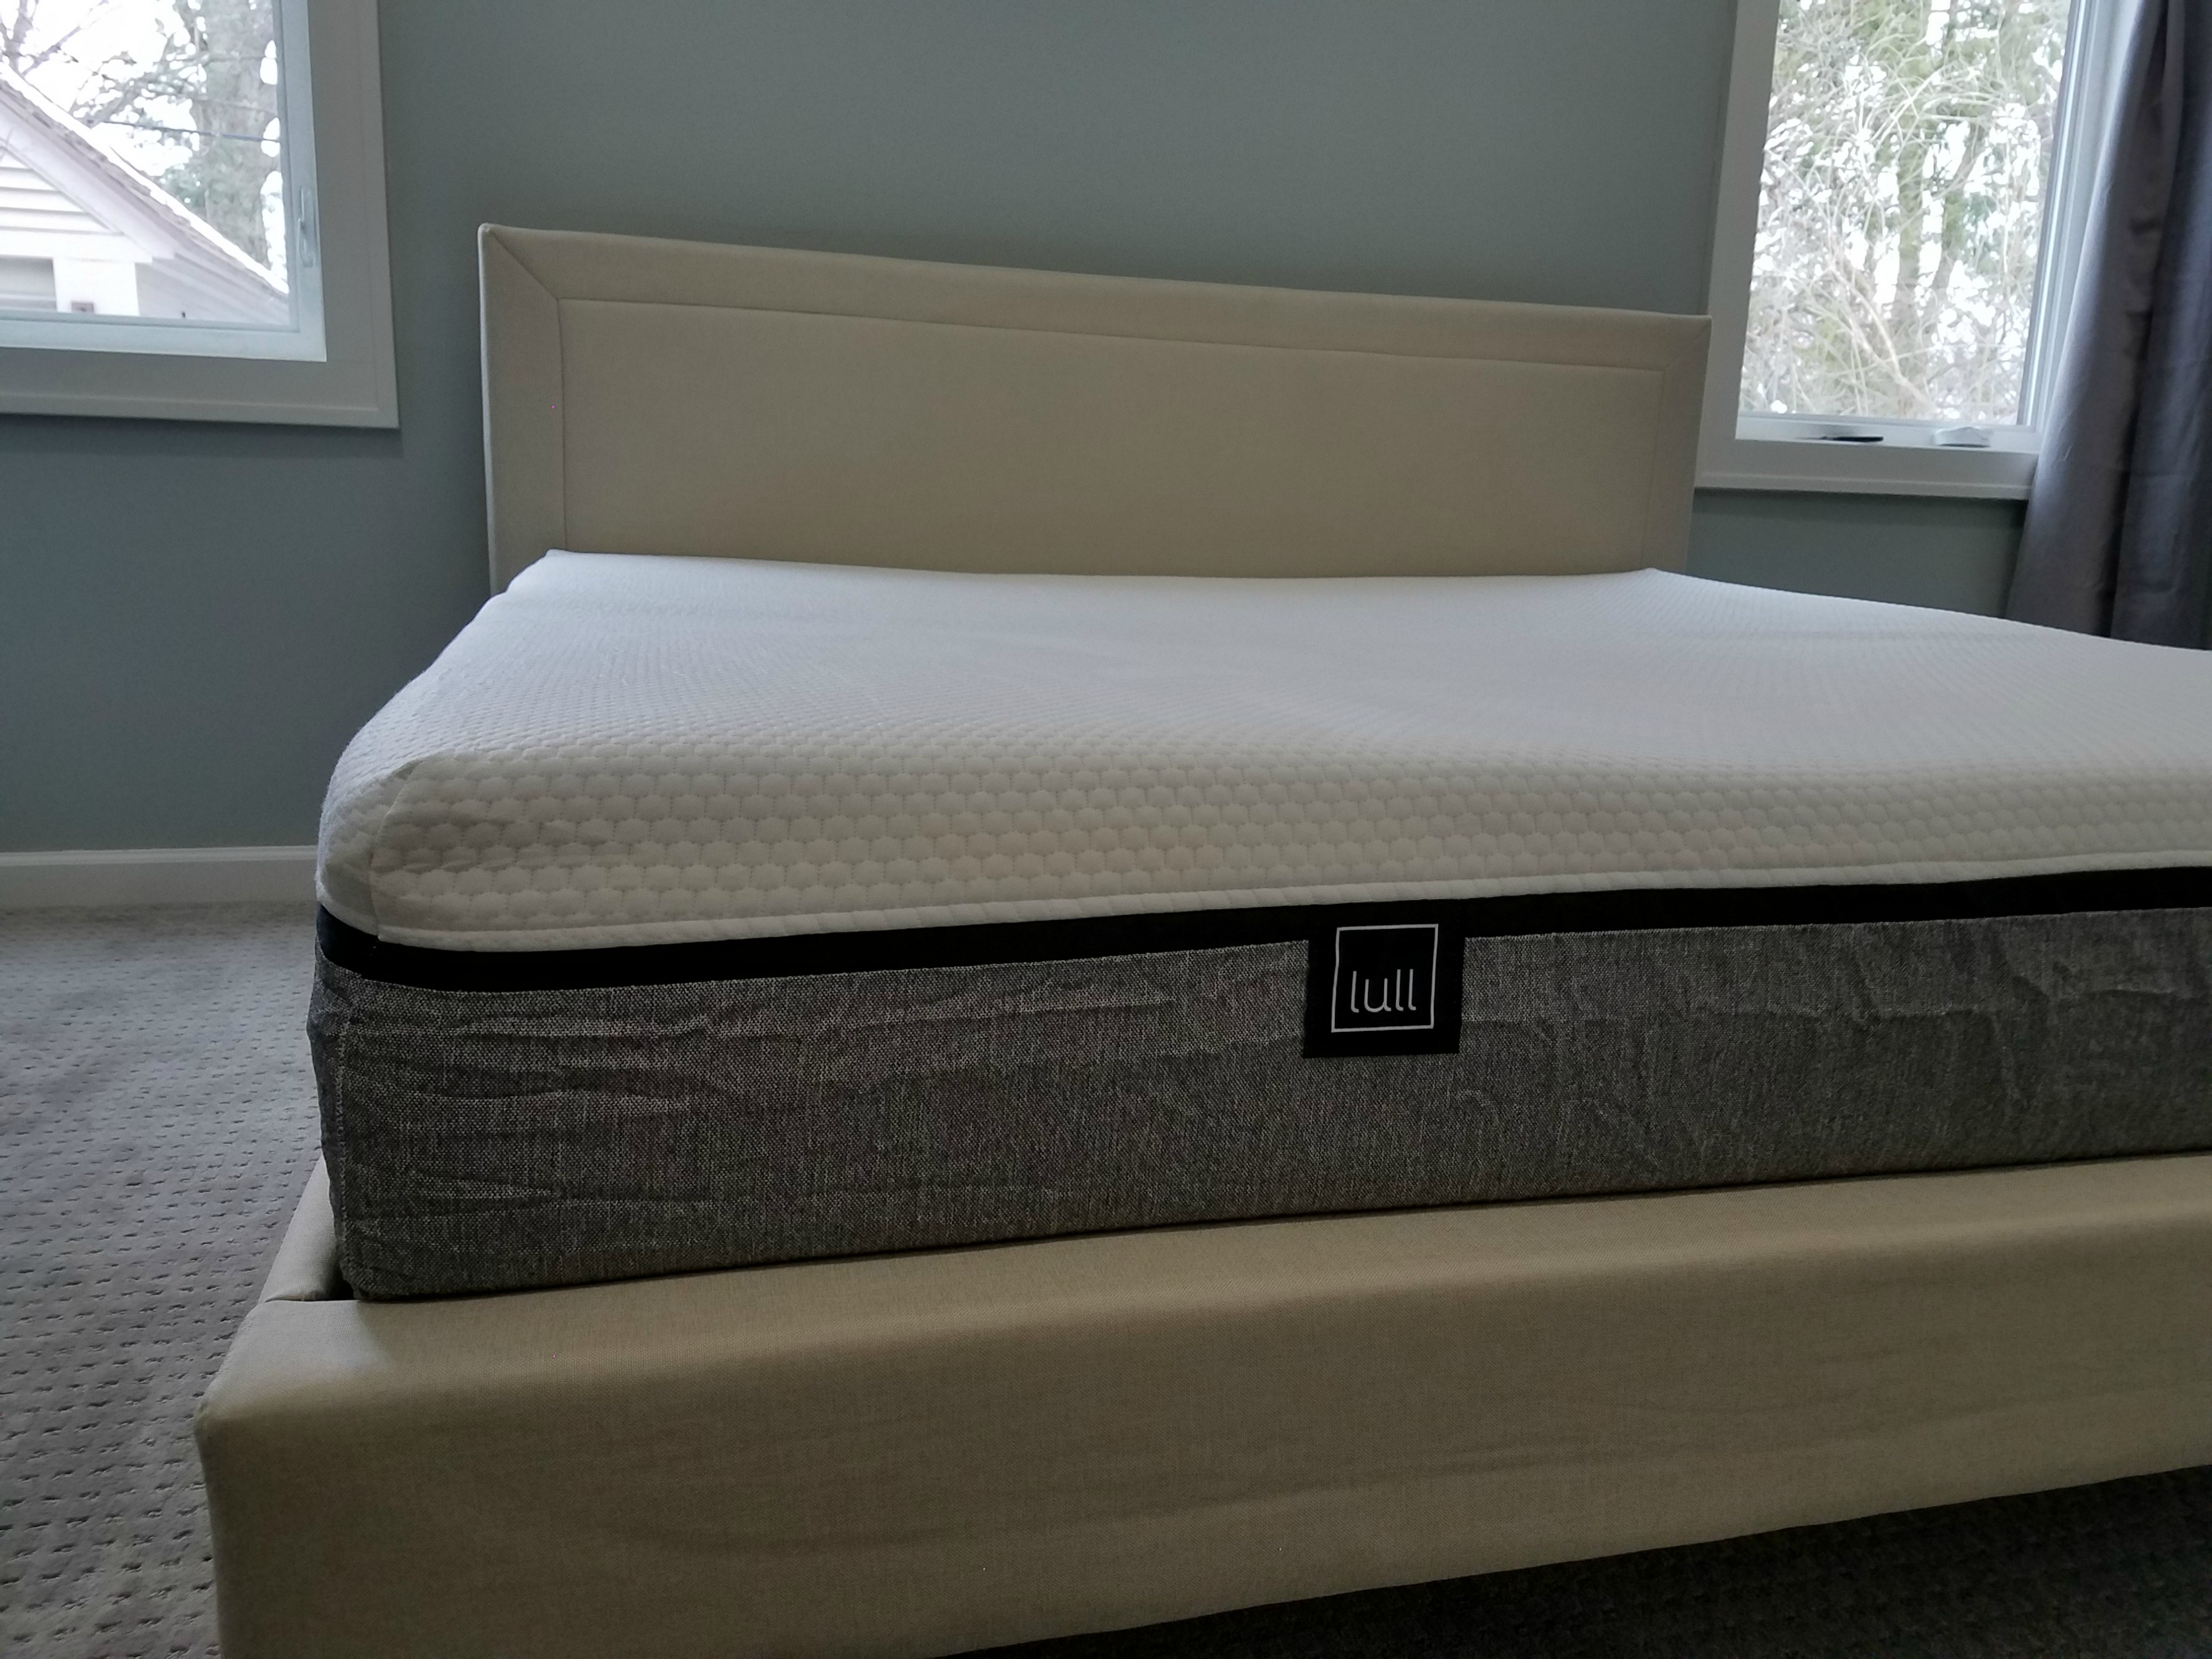 lull mattress price e